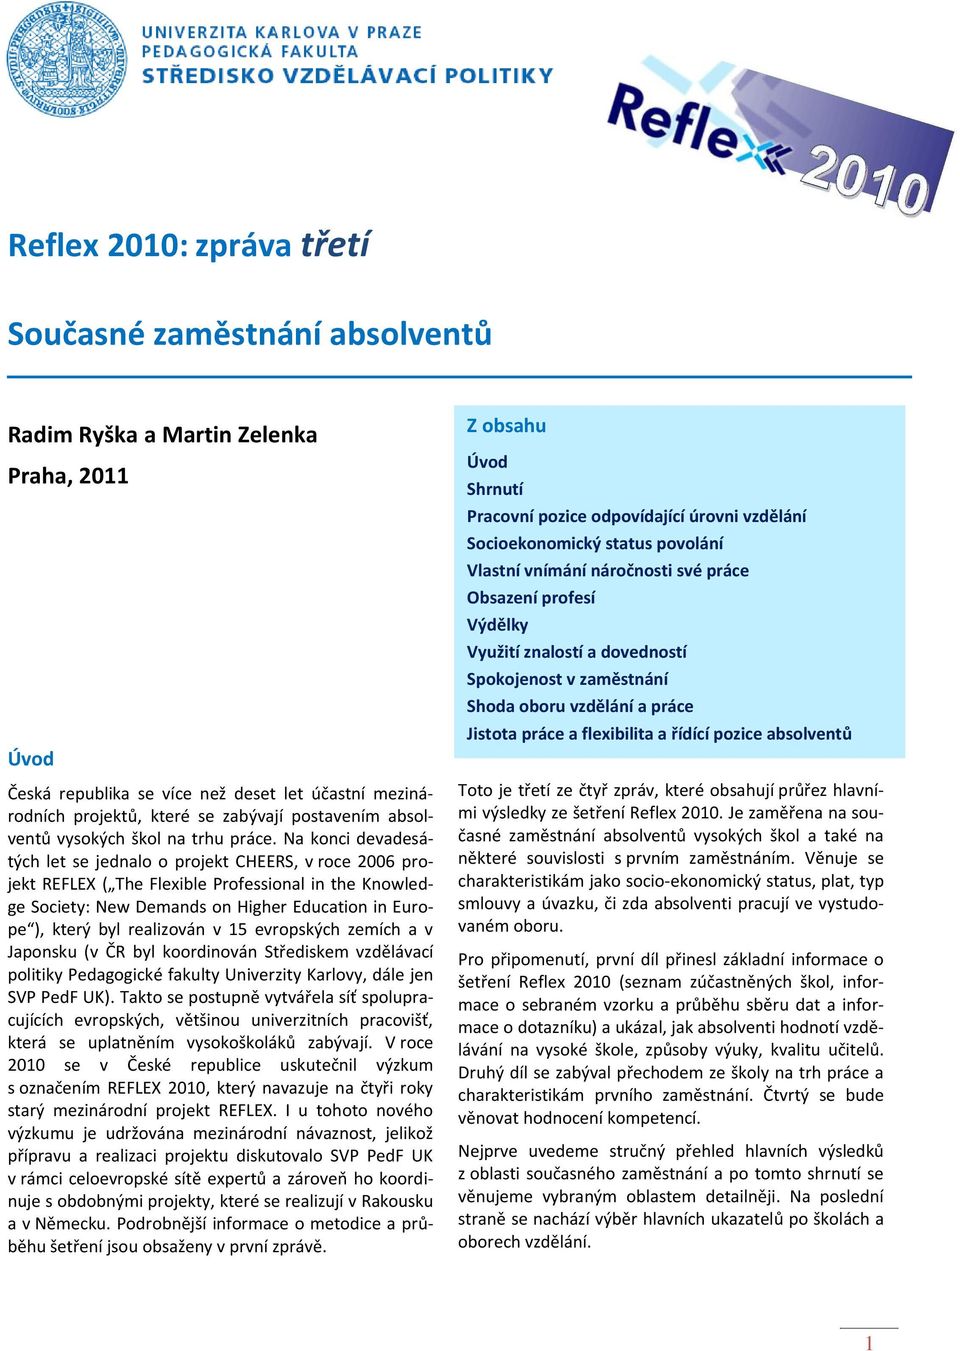 Na konci devadesátých let se jednalo o projekt CHEERS, v roce 2006 projekt REFLEX ( The Flexible Professional in the Knowledge Society: New Demands on Higher Education in Europe ), který byl